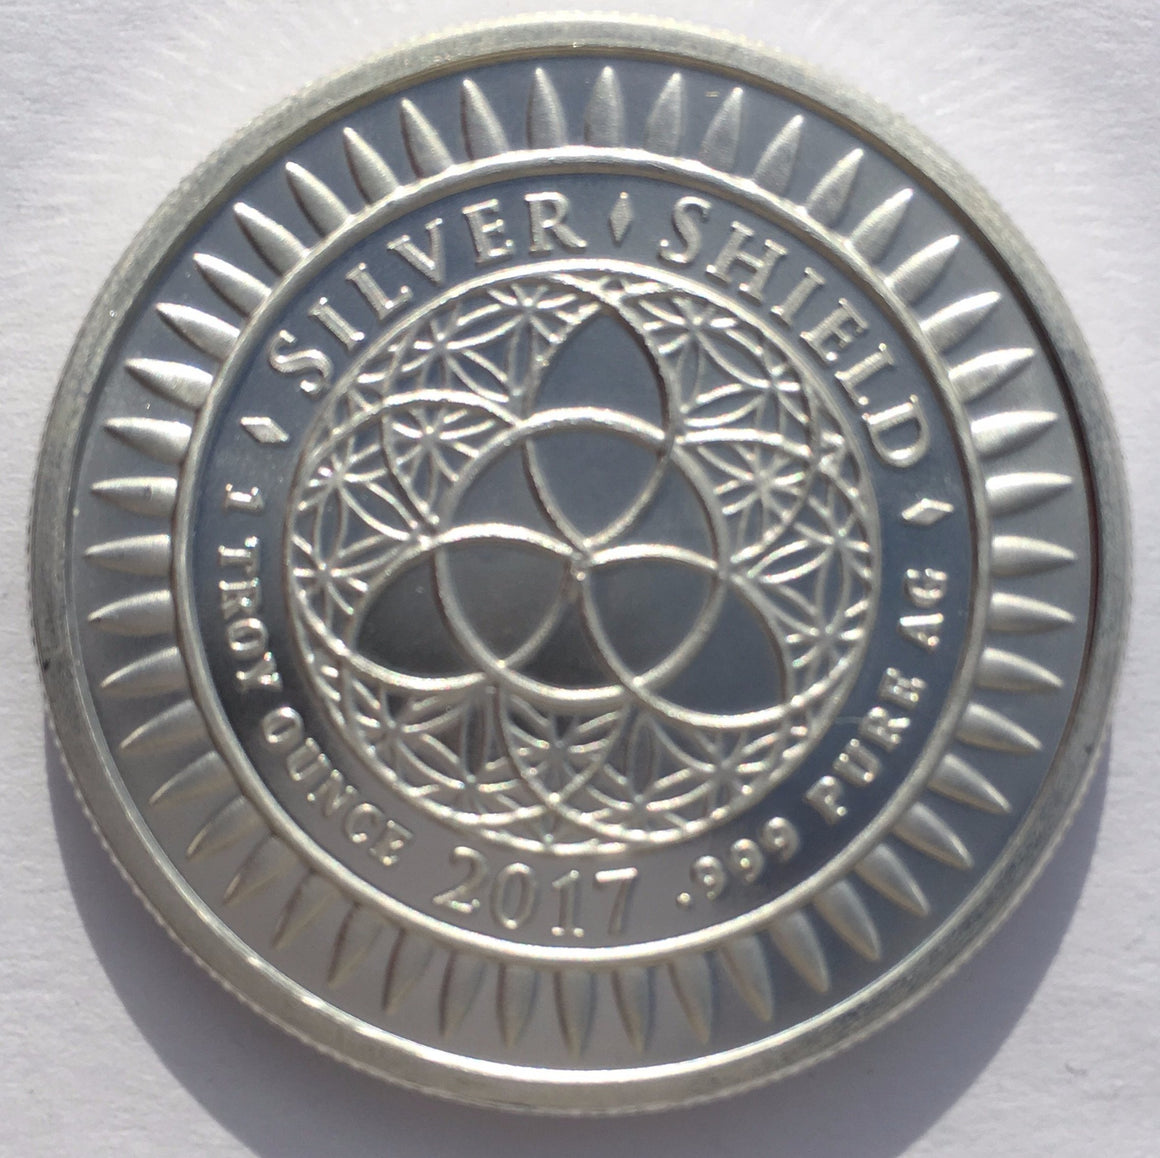 2017 James Madison by Silver Shield, Mini Mintage - BU 1 oz .999 Silver Round